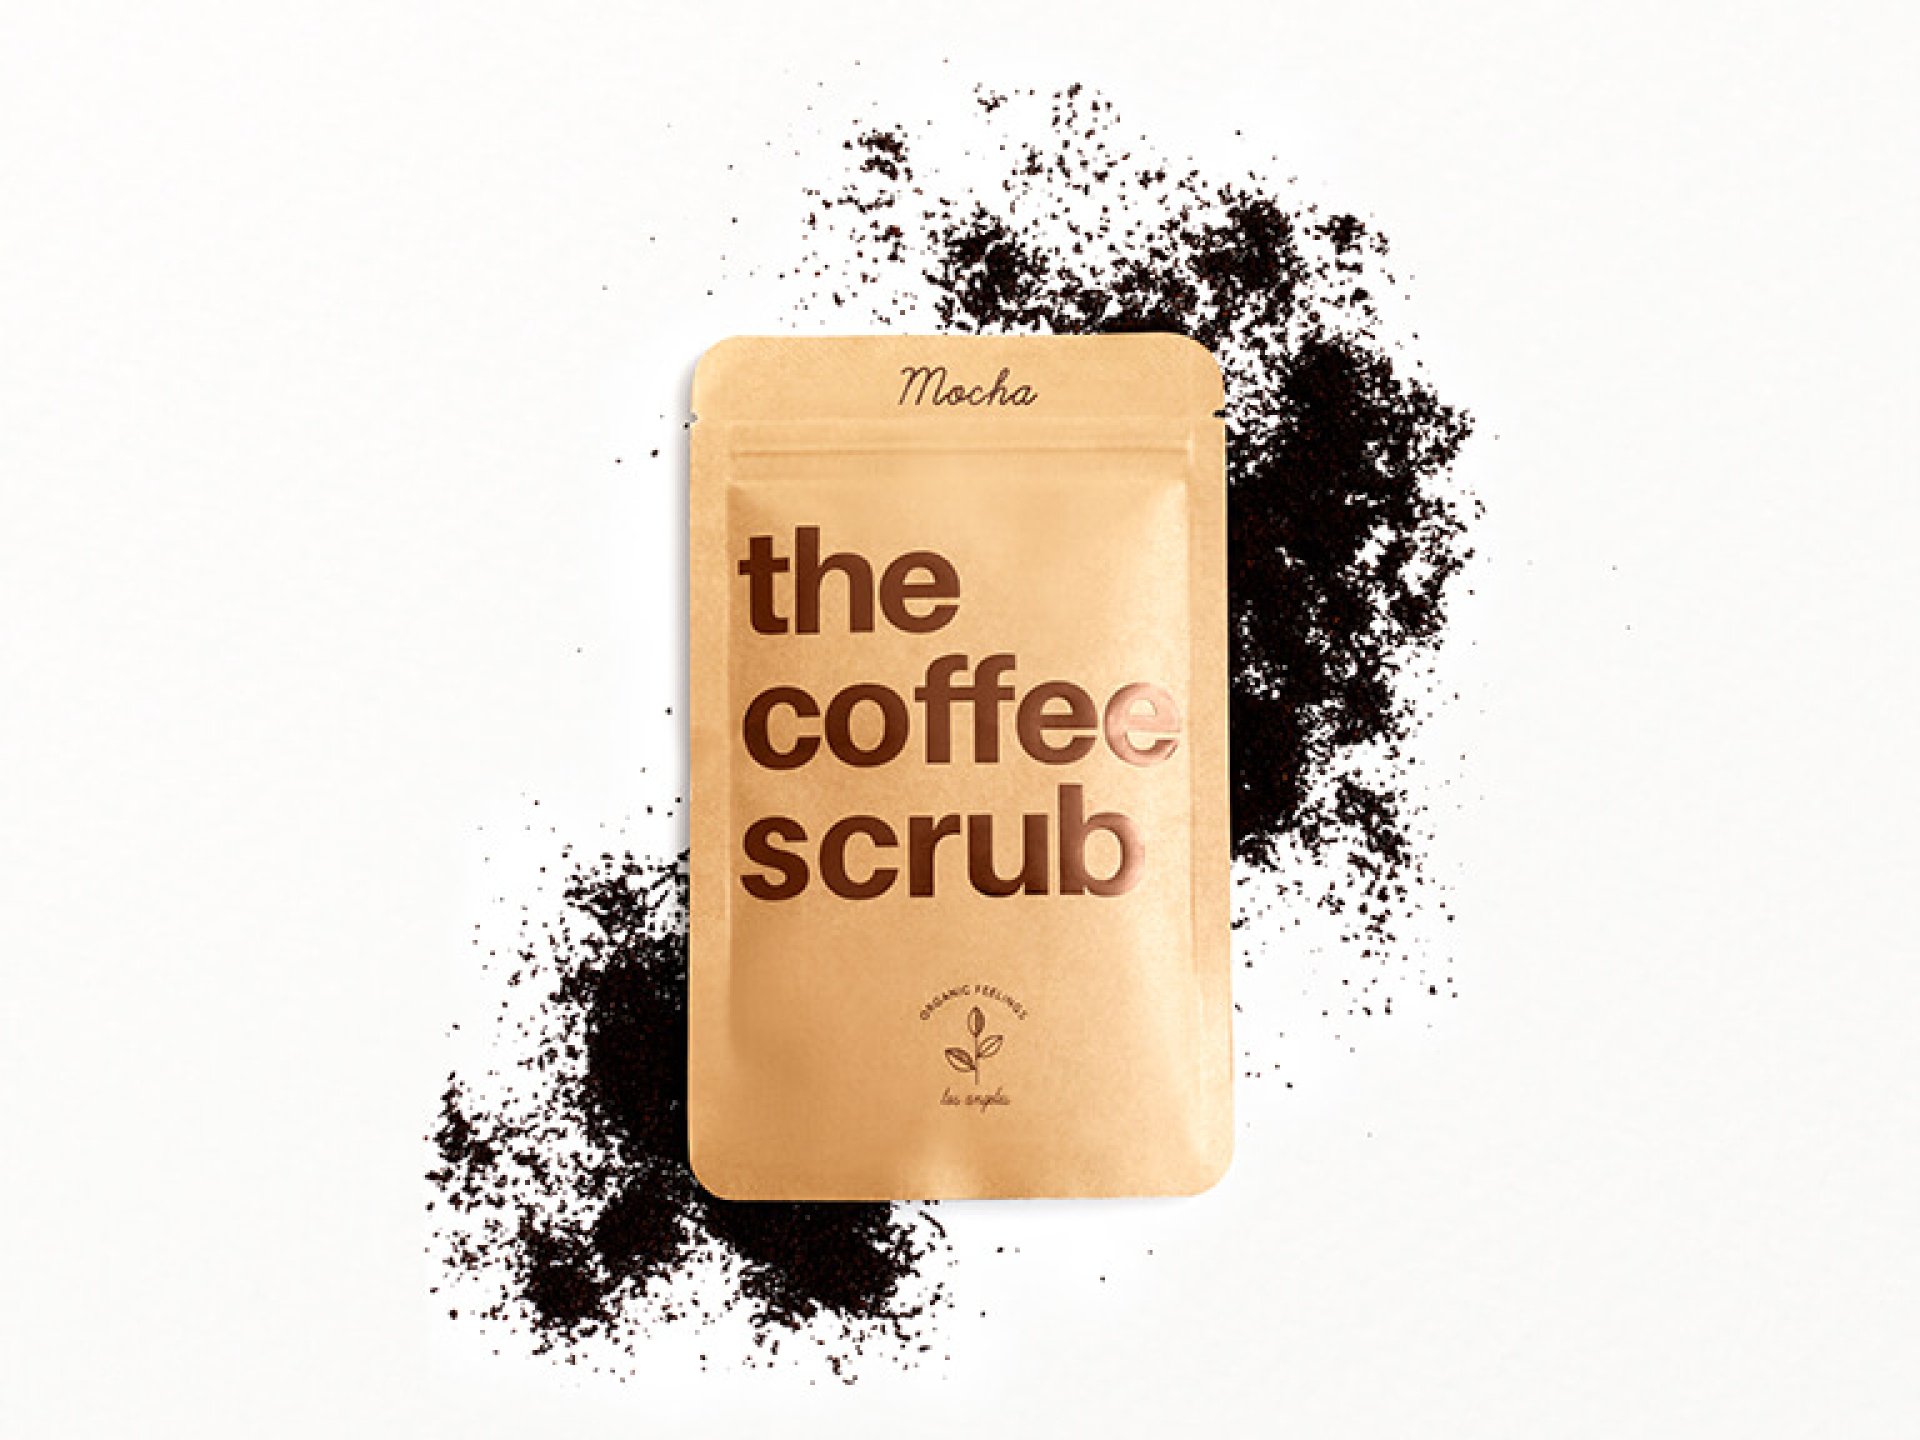 THE COFFEE SCRUB The Coffee Scrub in Mocha